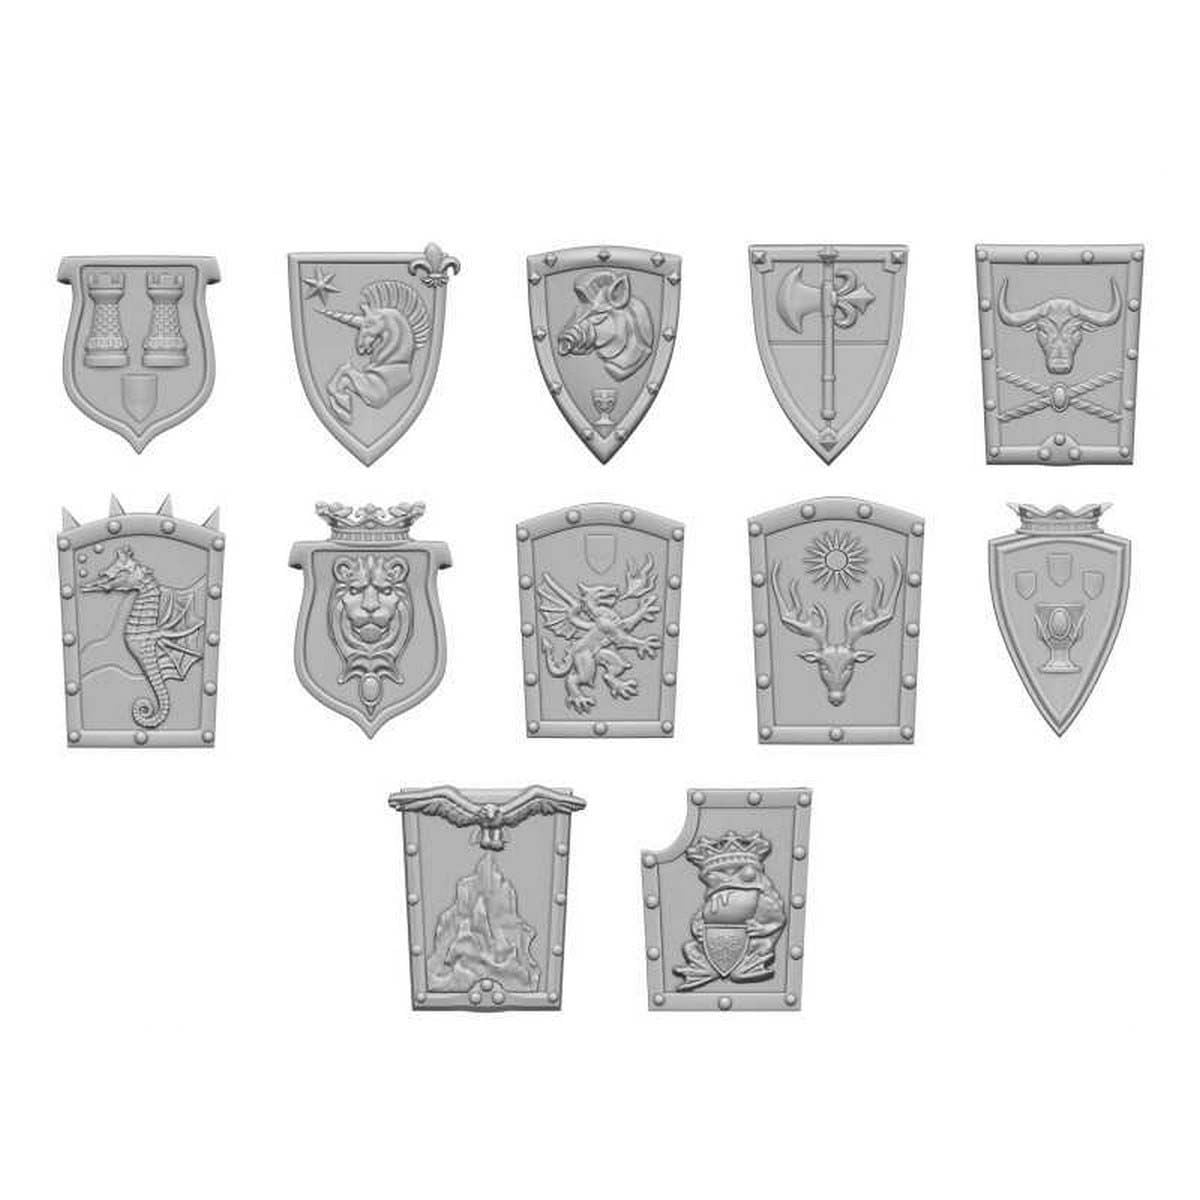 3D Printed Set - Old World Medieval Shields